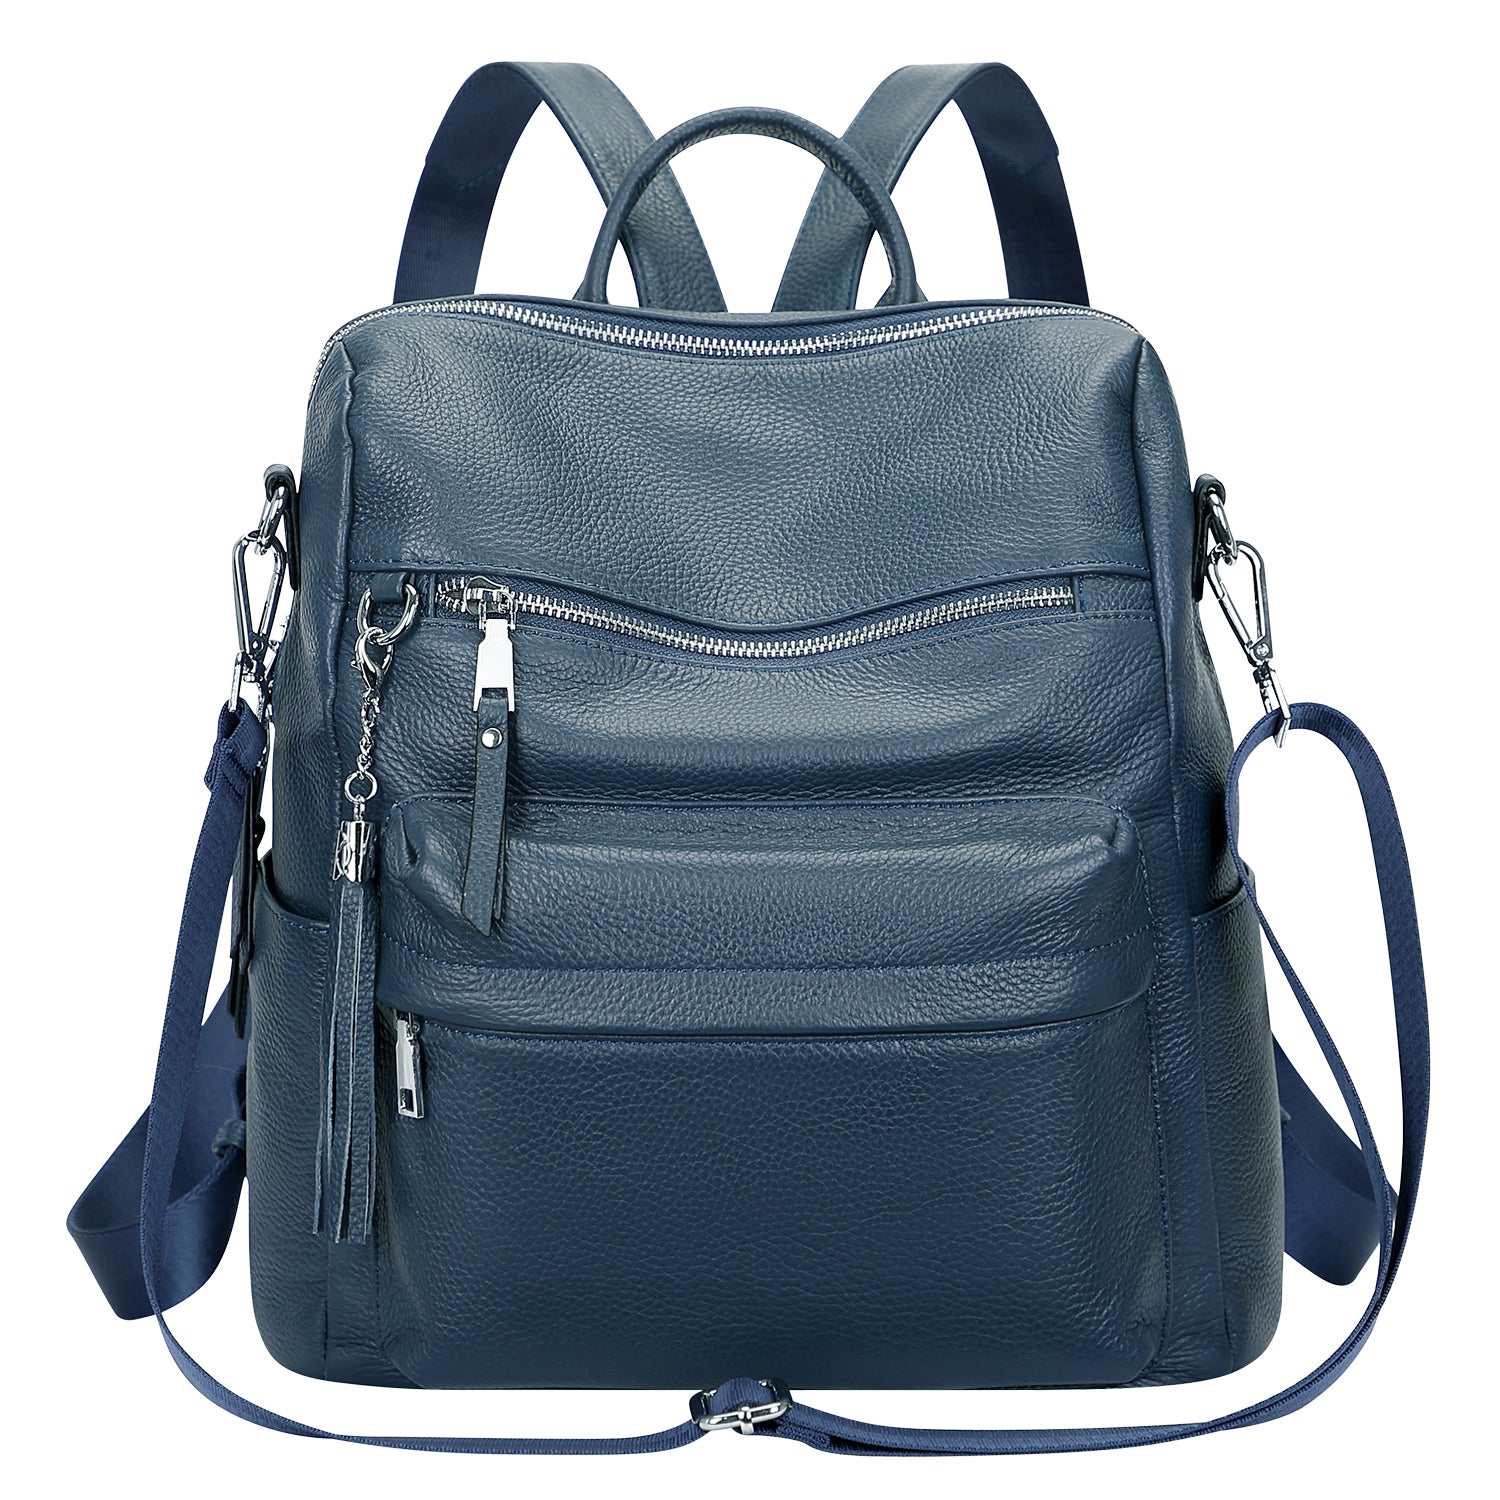 Genuine Leather Backpack Purse for Women Convertible Shoulder bag